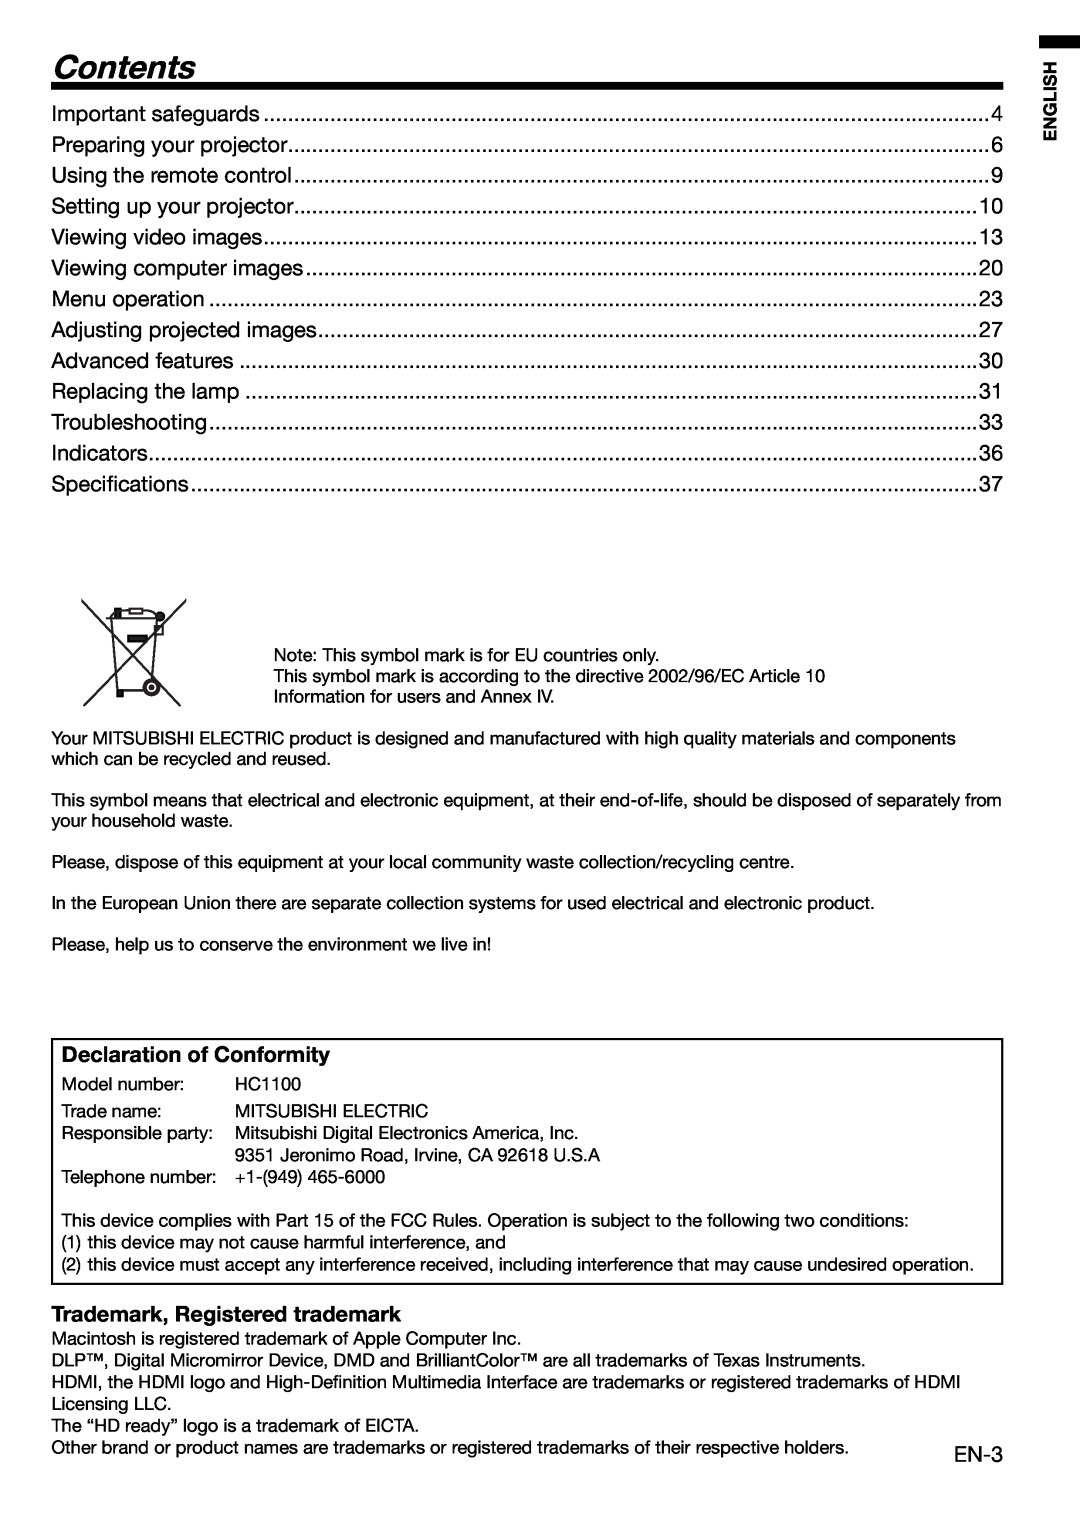 Mitsubishi HC1100 user manual Contents, Declaration of Conformity, Trademark, Registered trademark 